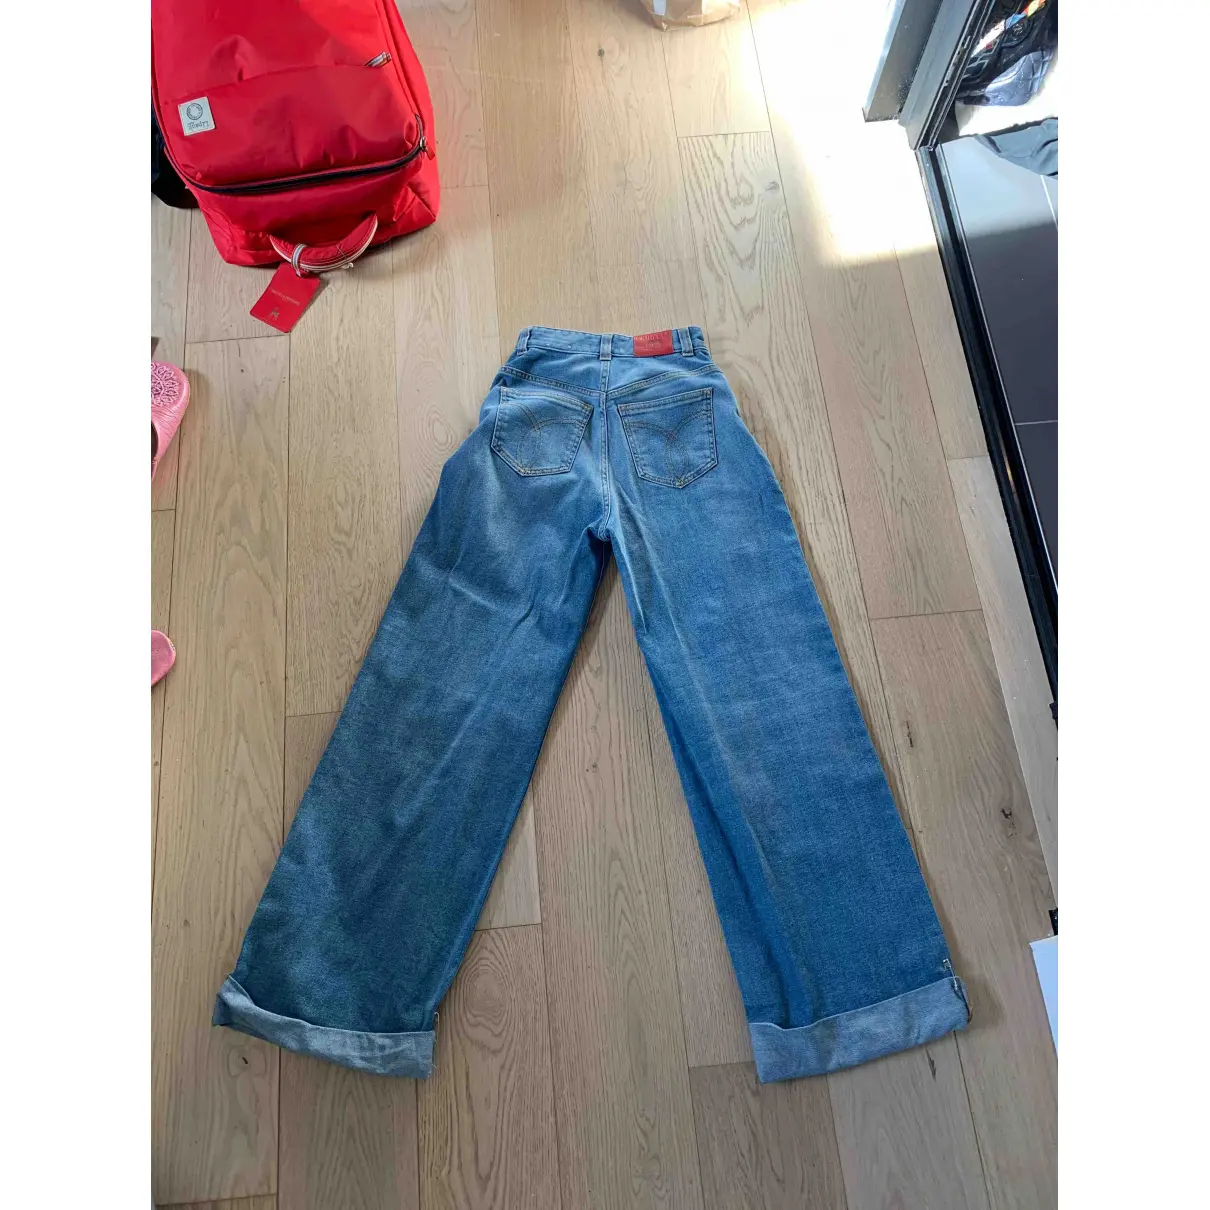 Buy Fiorucci Jeans online